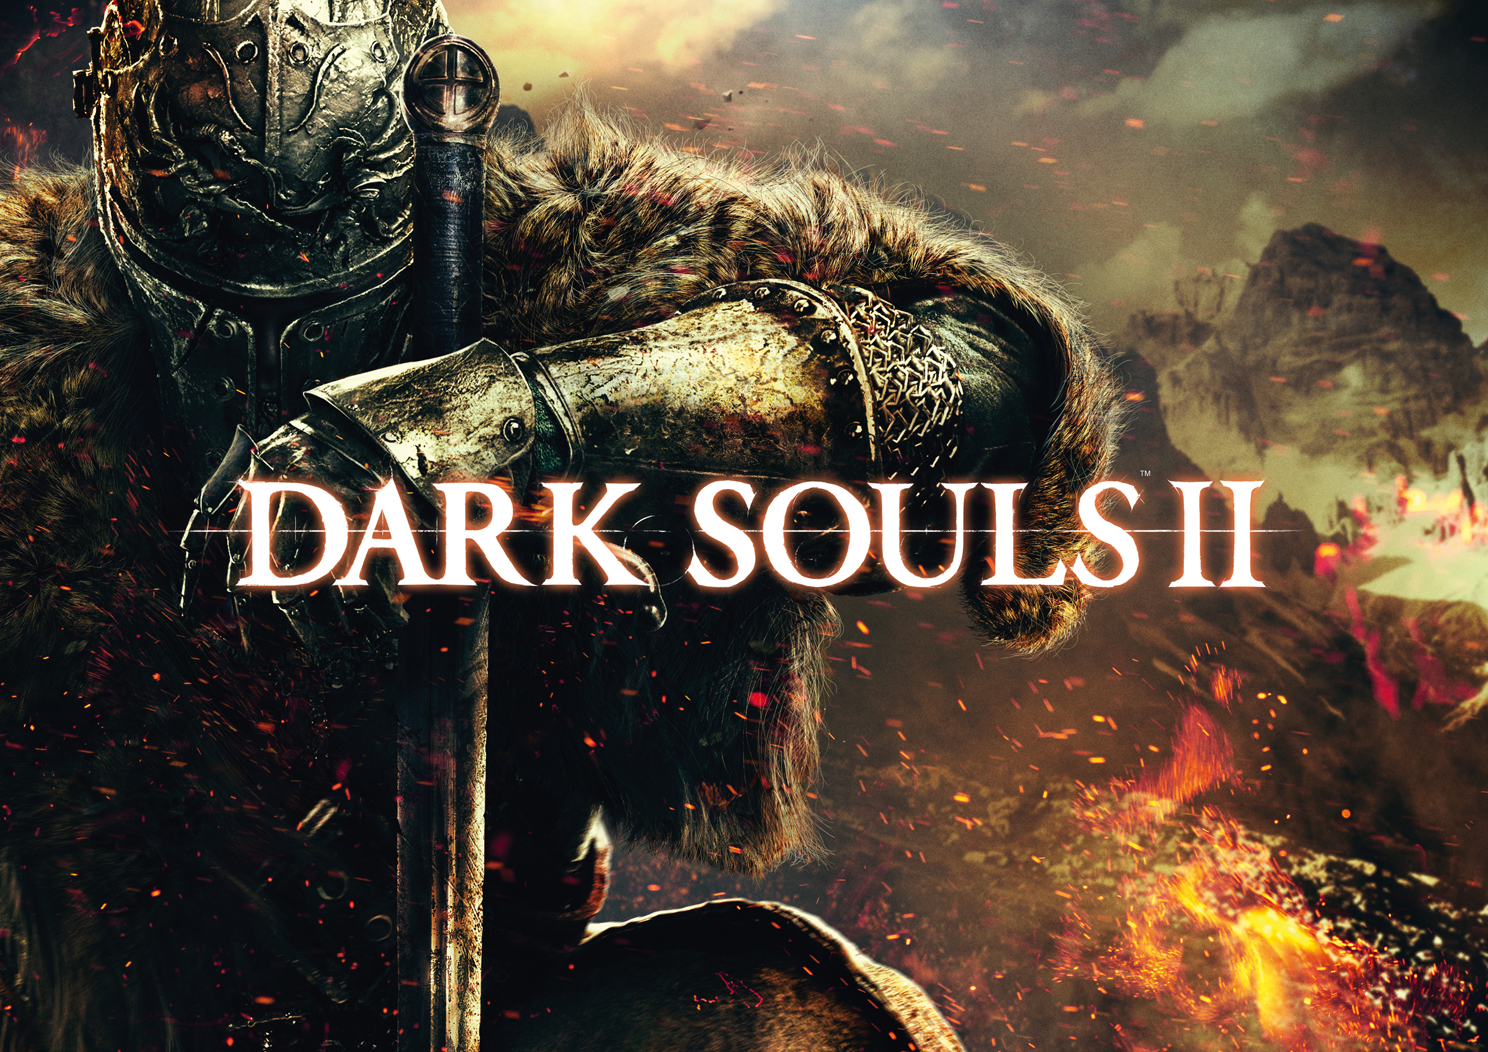 Dark souls ii gets early steam release + 25% discount